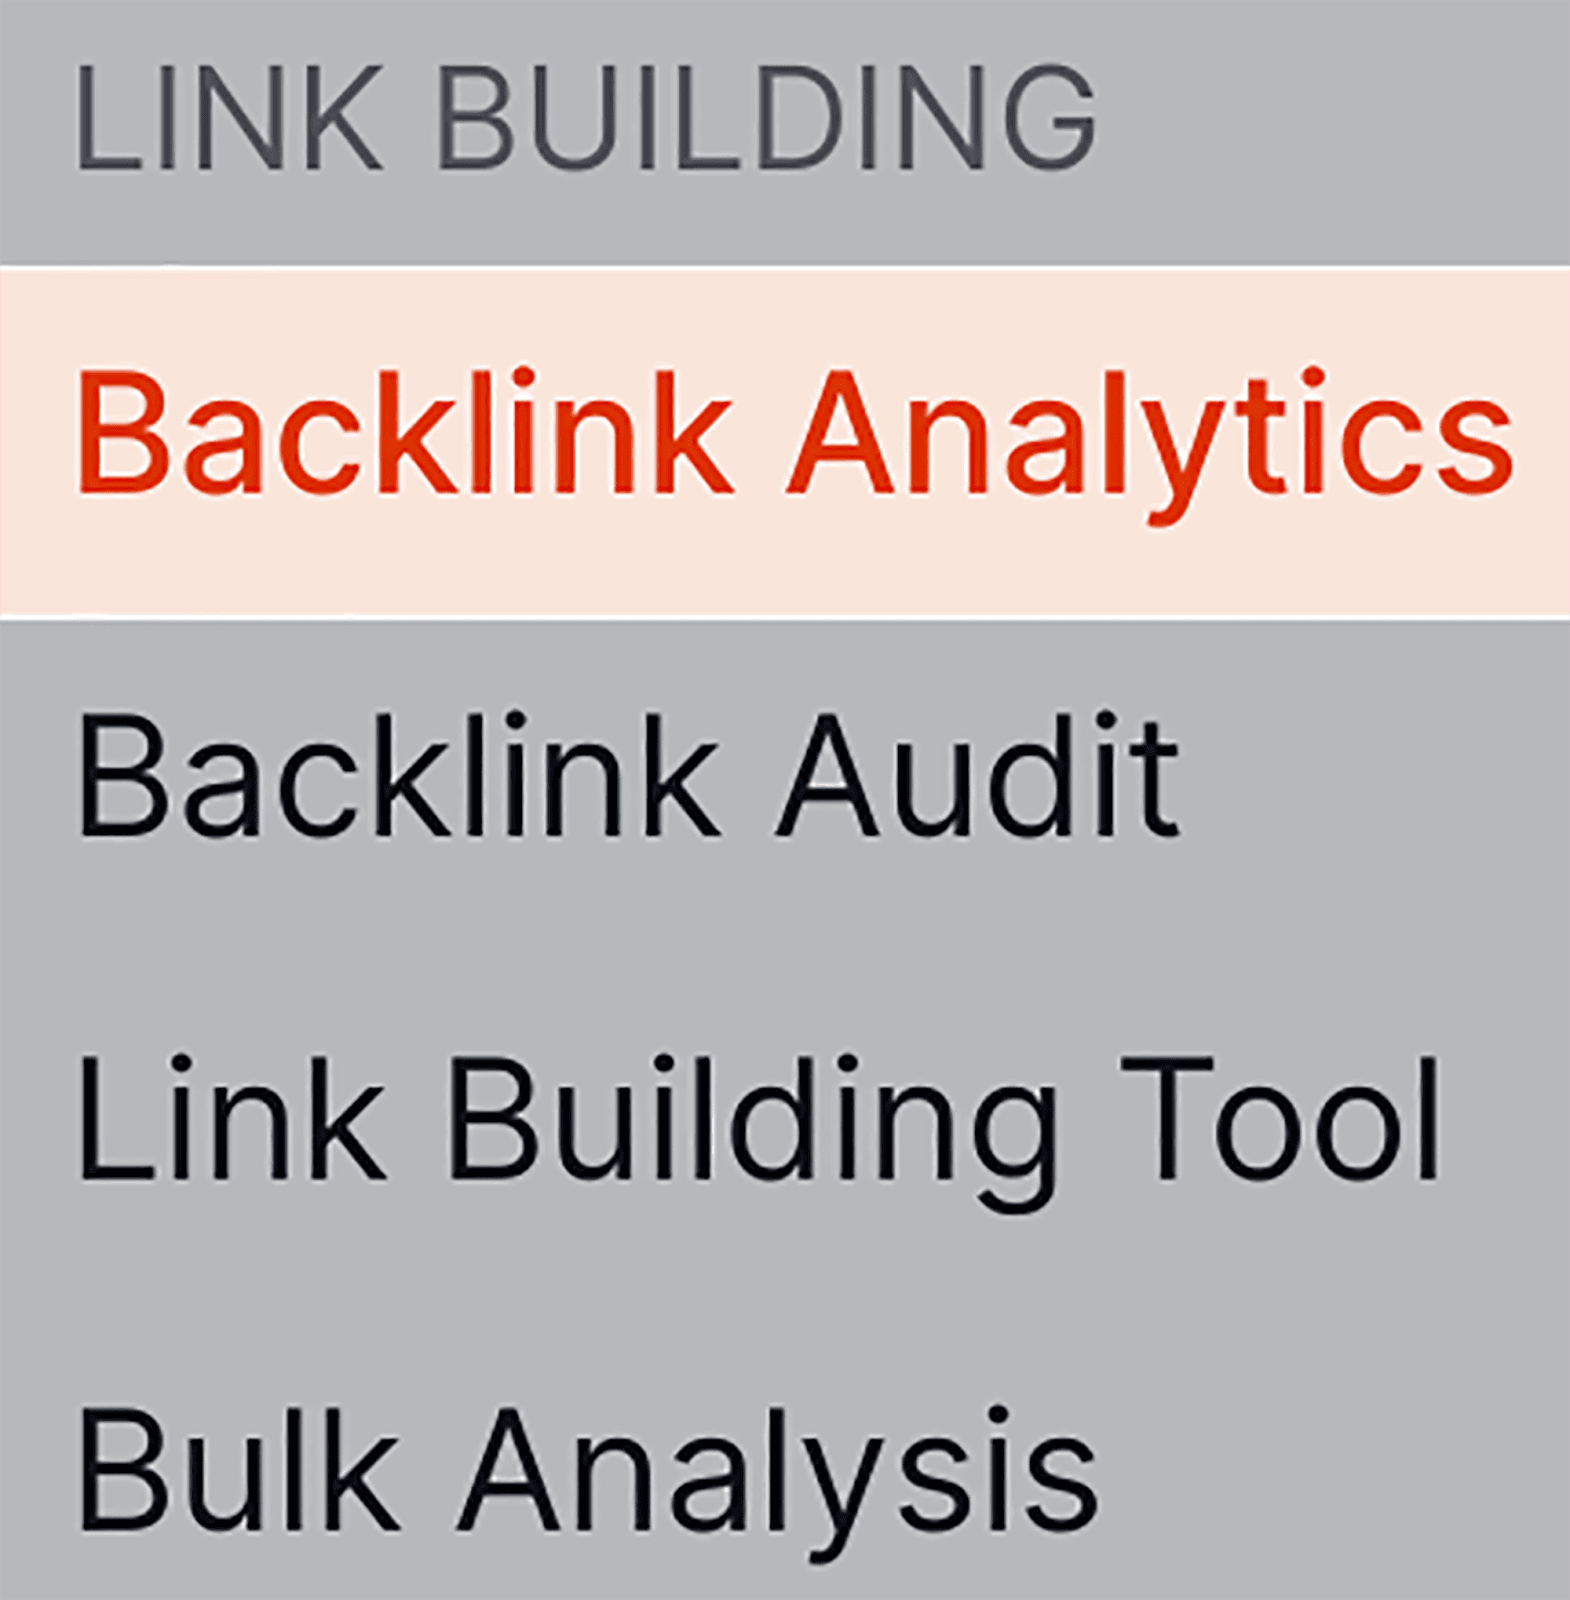 Select Backlink Analytics from the main menu